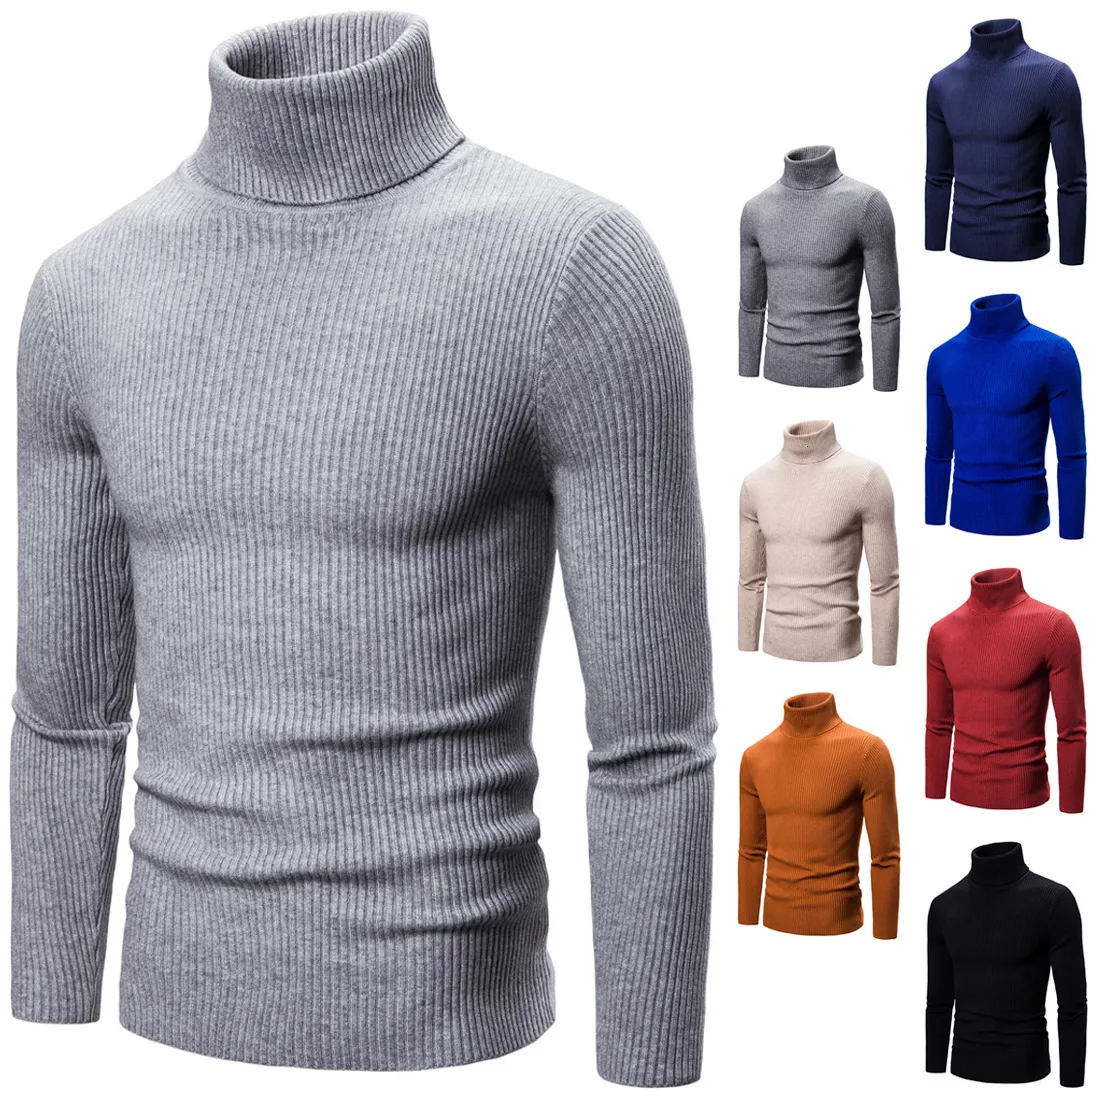 Camisolas masculinos Autumn e Winter Men Sweater Sweater Male Corean Version Casual Casual Match Bottoming Camisa 230208